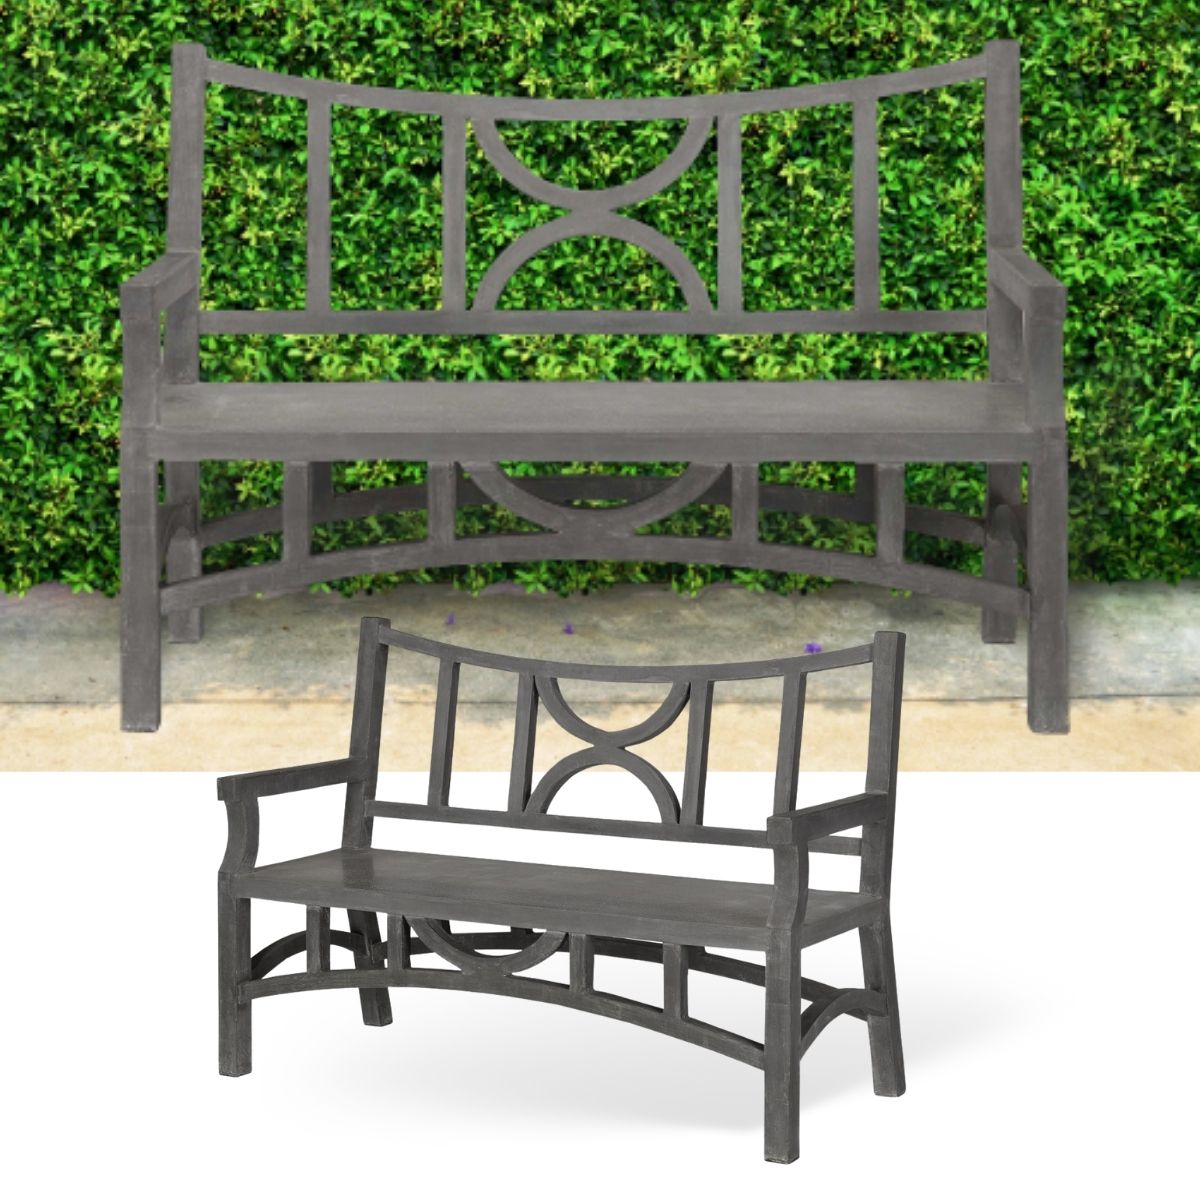 colesden-bench-faux-bois-currey-garden-seat